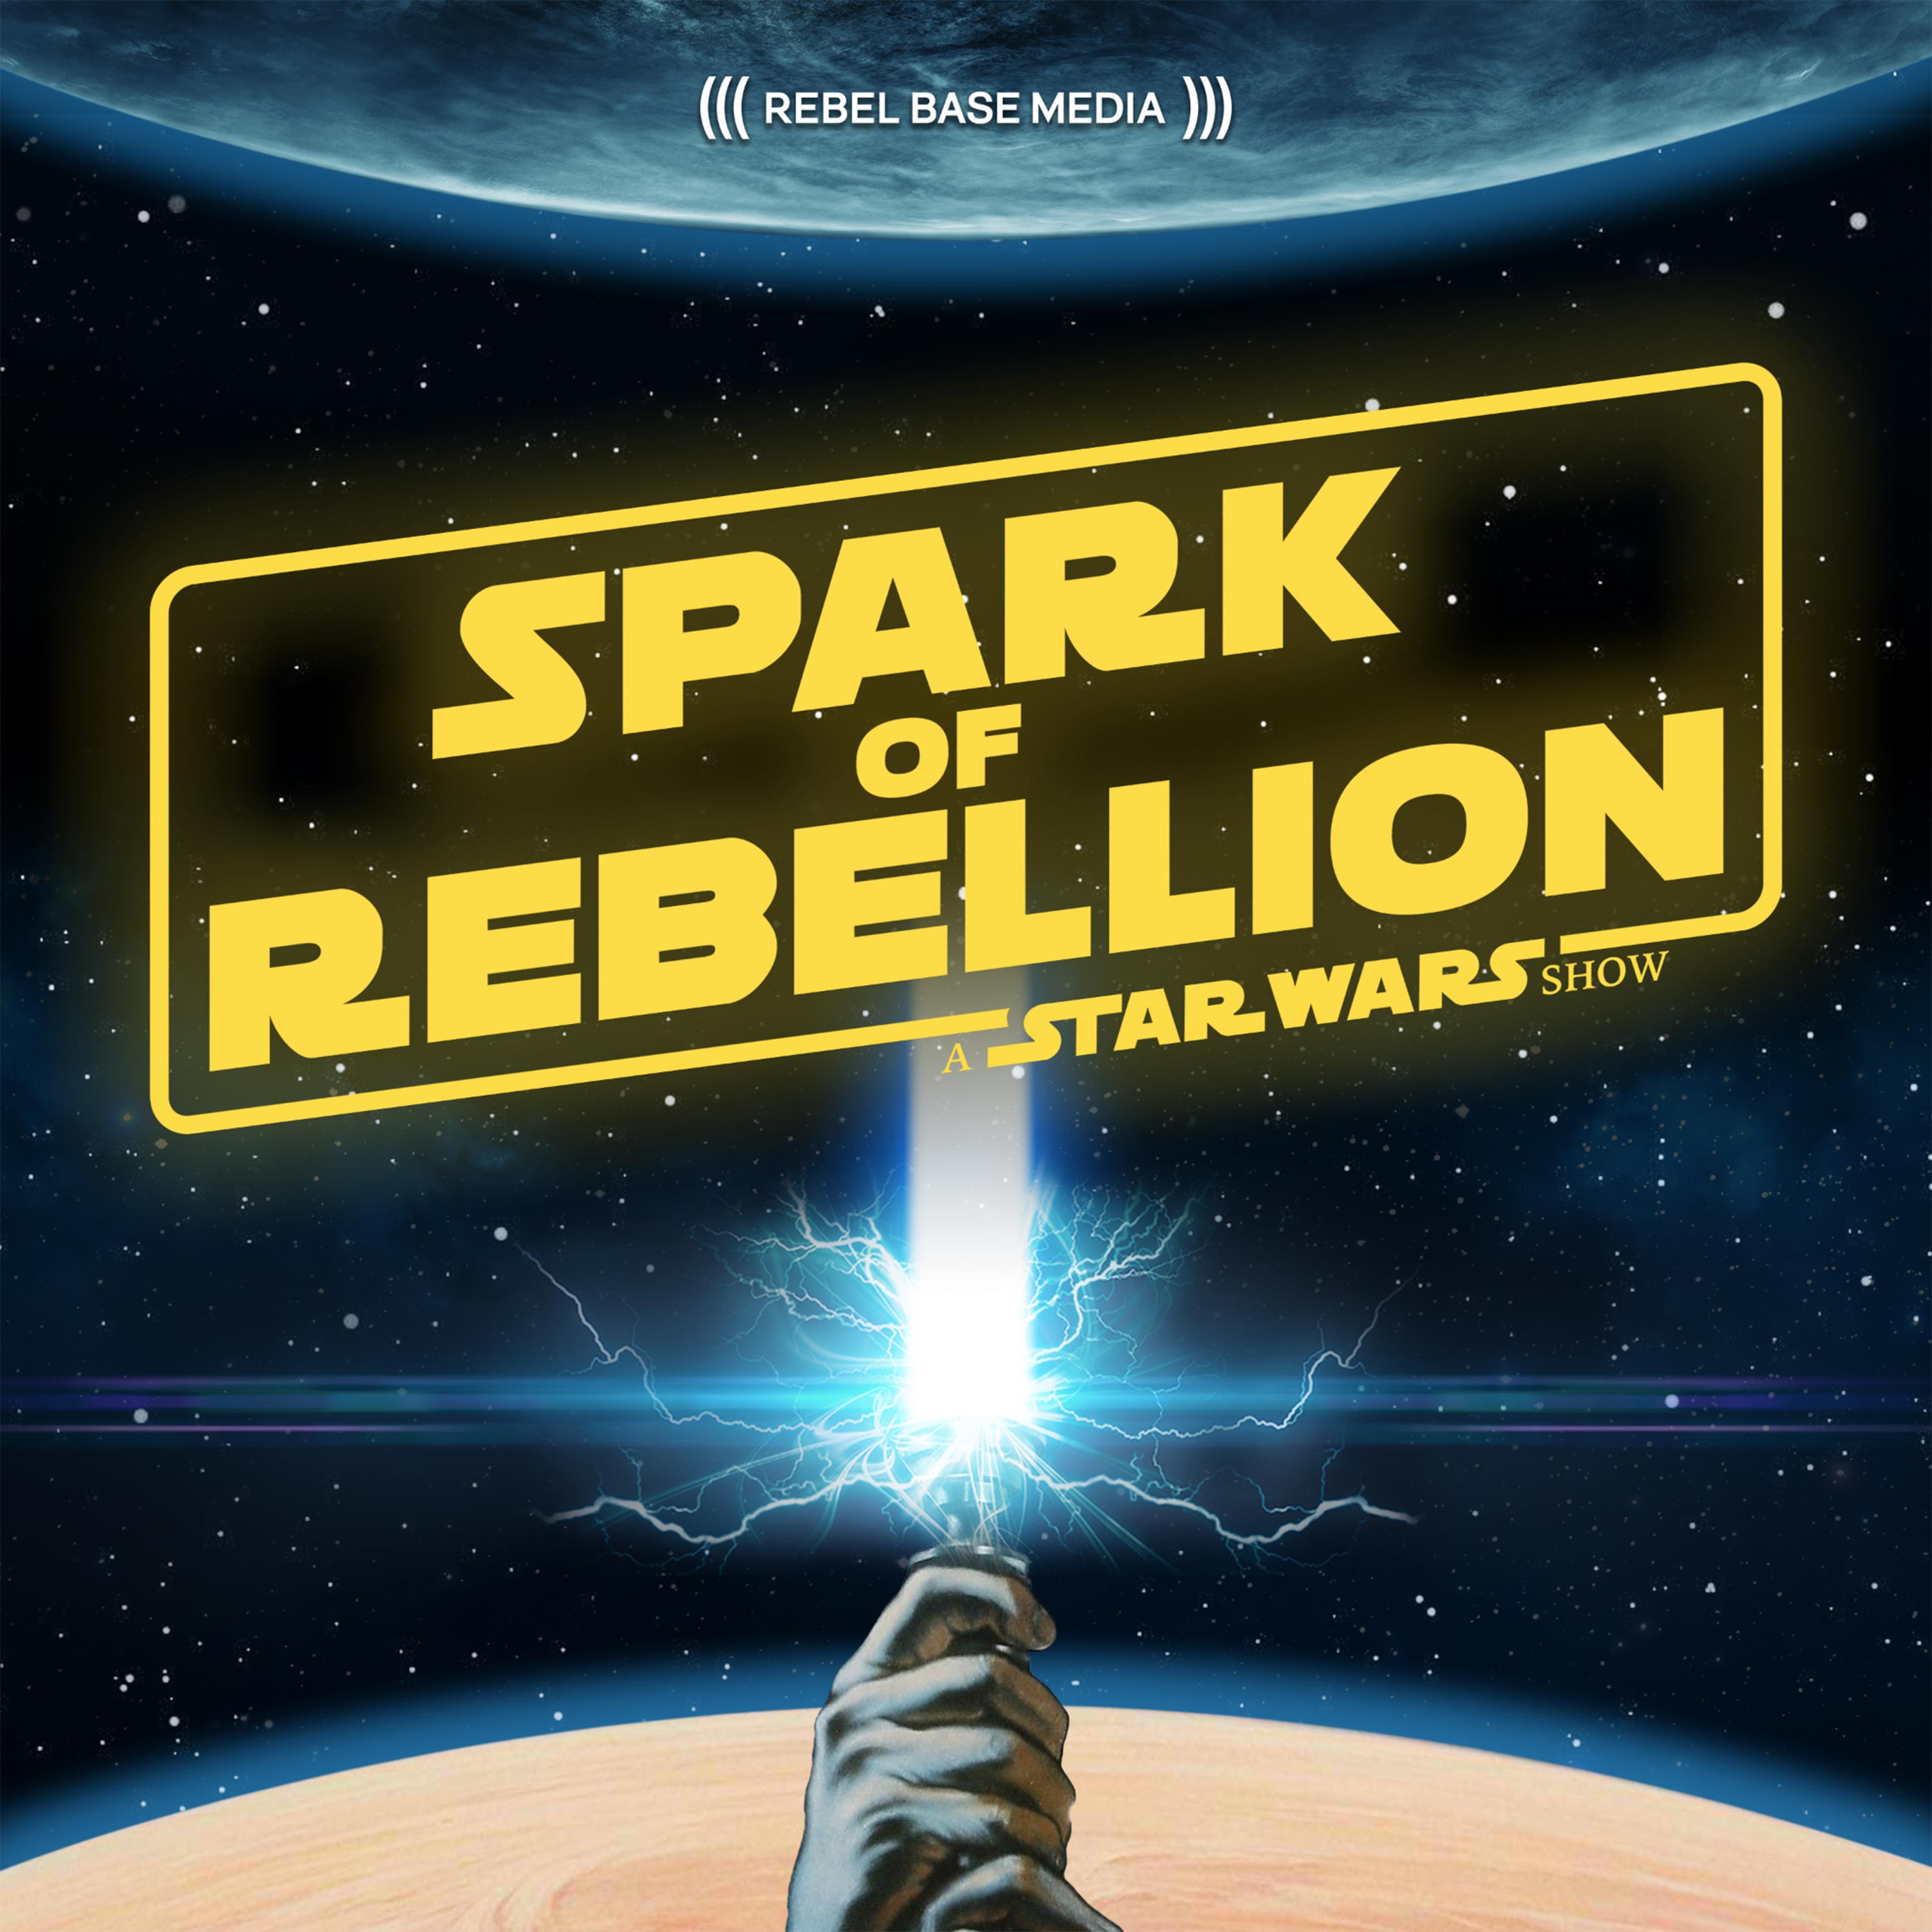 Artwork for podcast Spark of Rebellion, A Star Wars Show